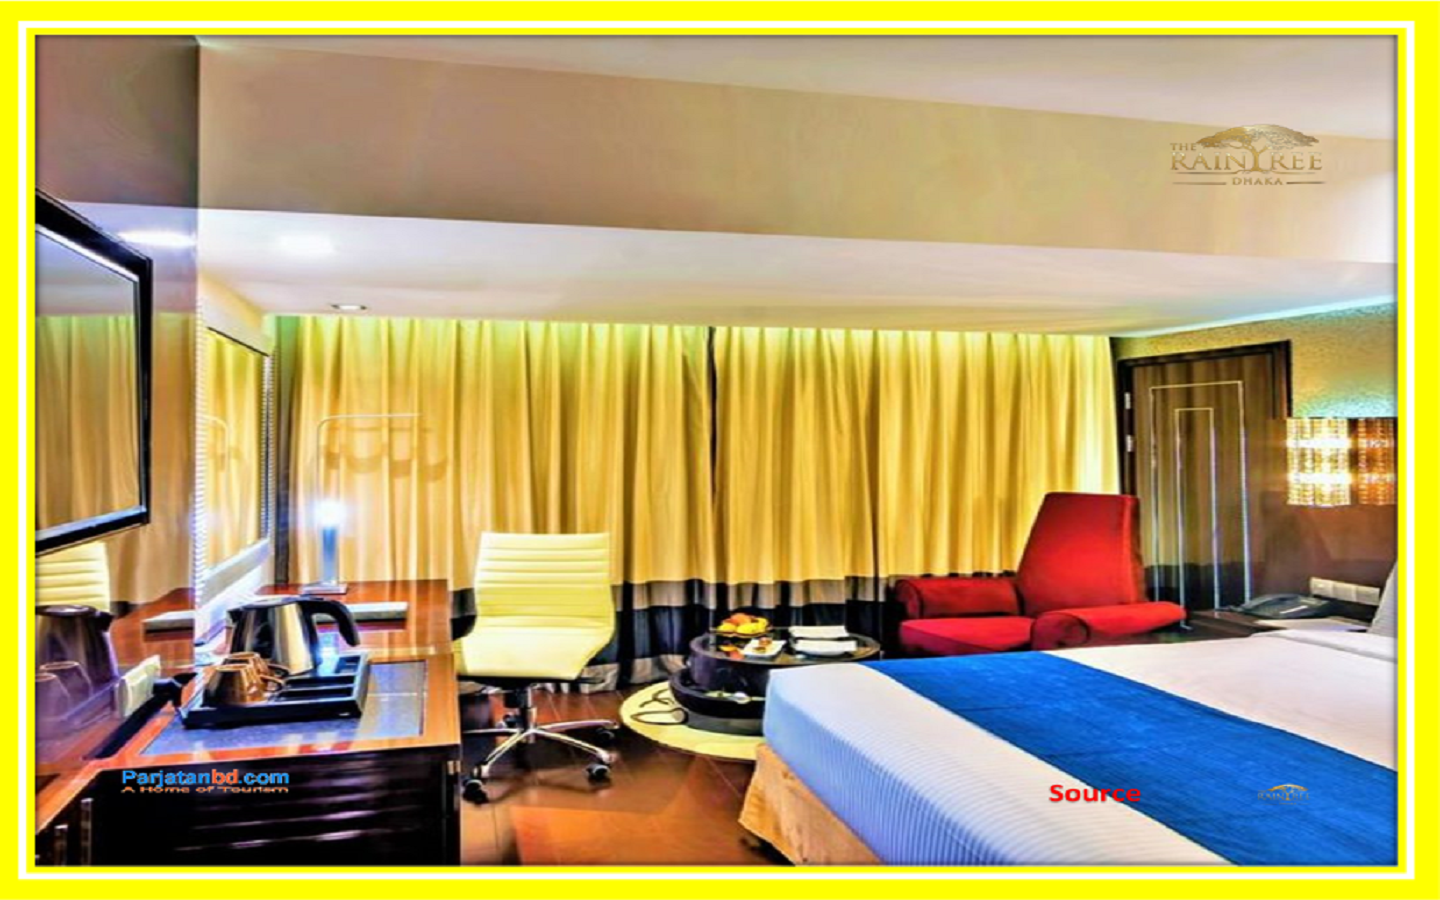 Room Executive Double Room -1, The Raintree Hotel, Banani